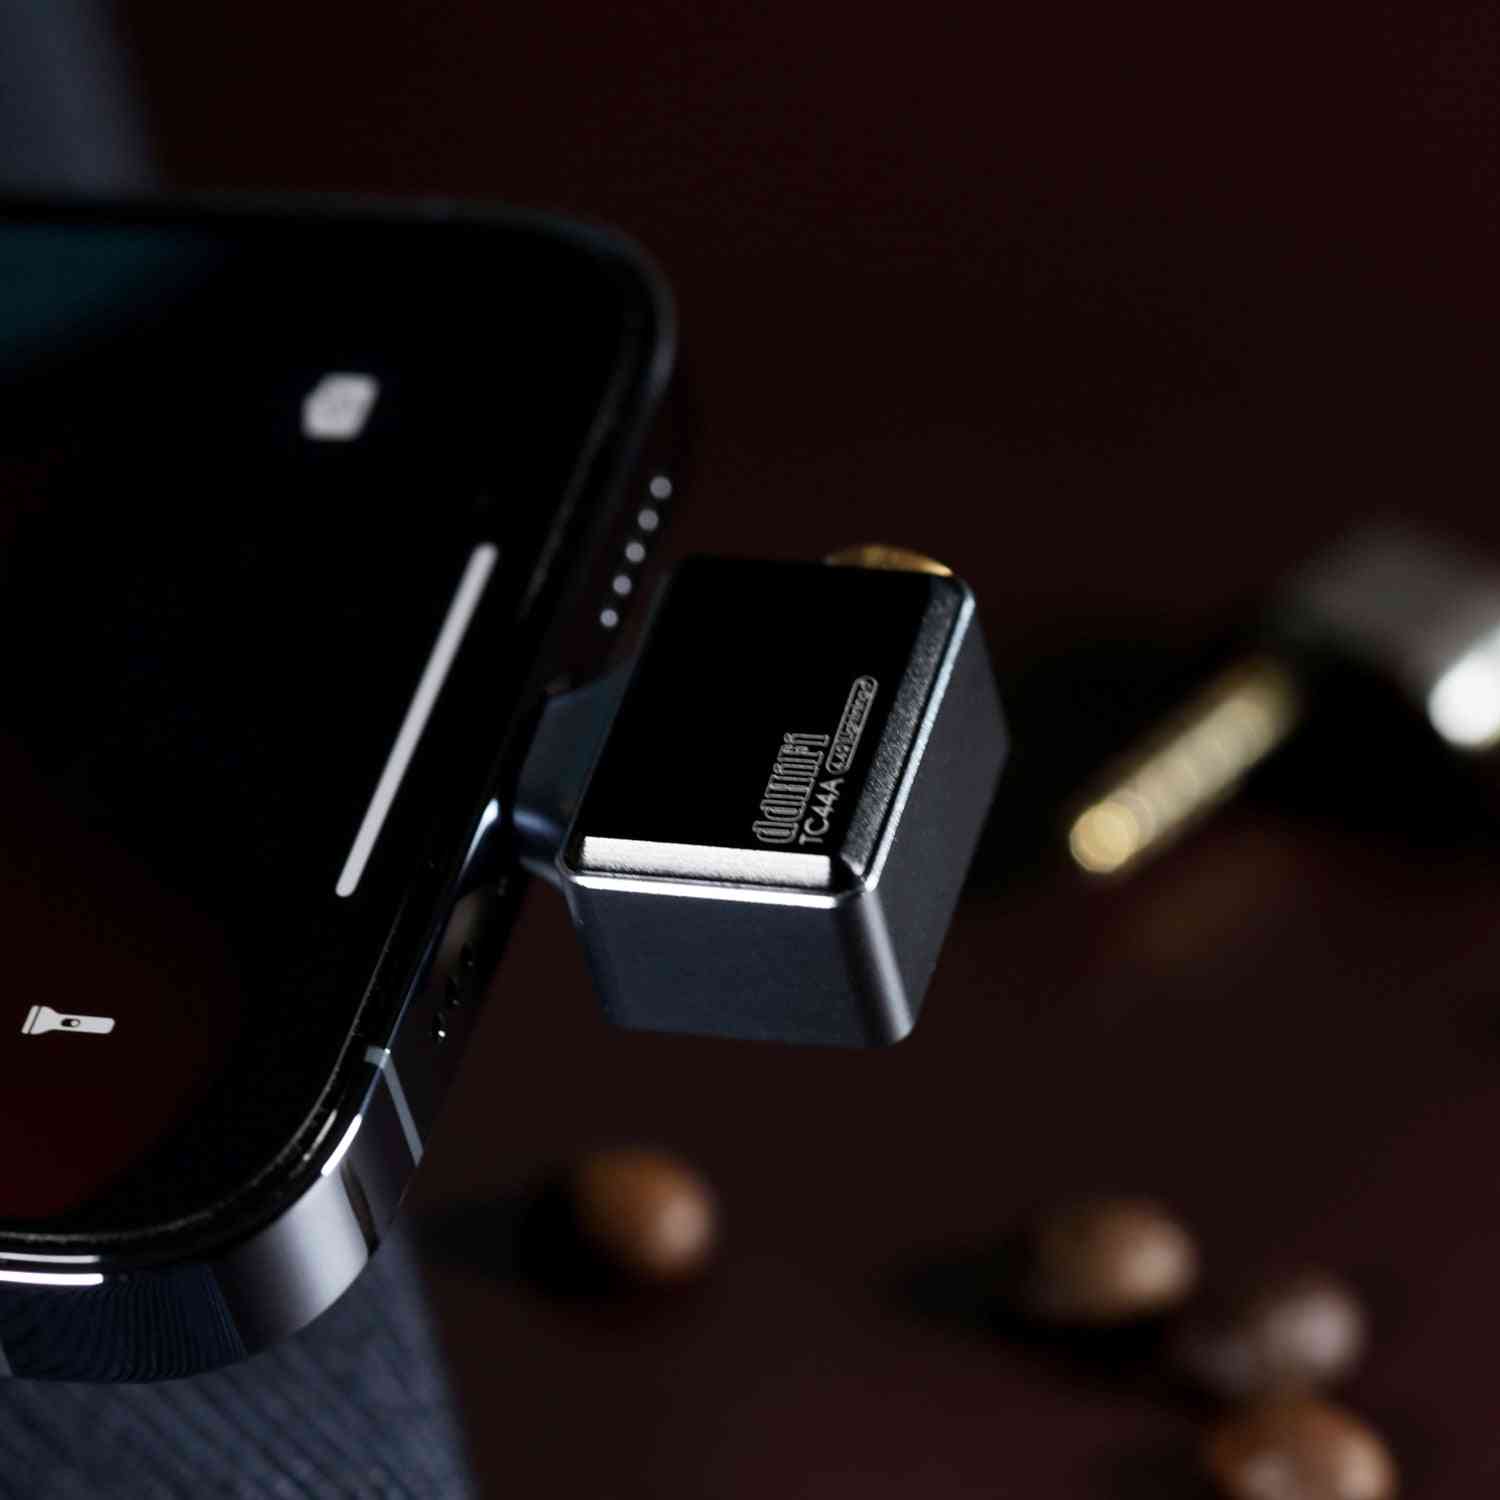 Dd ddhifi tc44a light-ning til 4,4 mm hovedtelefonadapter til iphone, cs43131 dac-chip, understøtter native dsd256 og 32-bit 384khz pcm